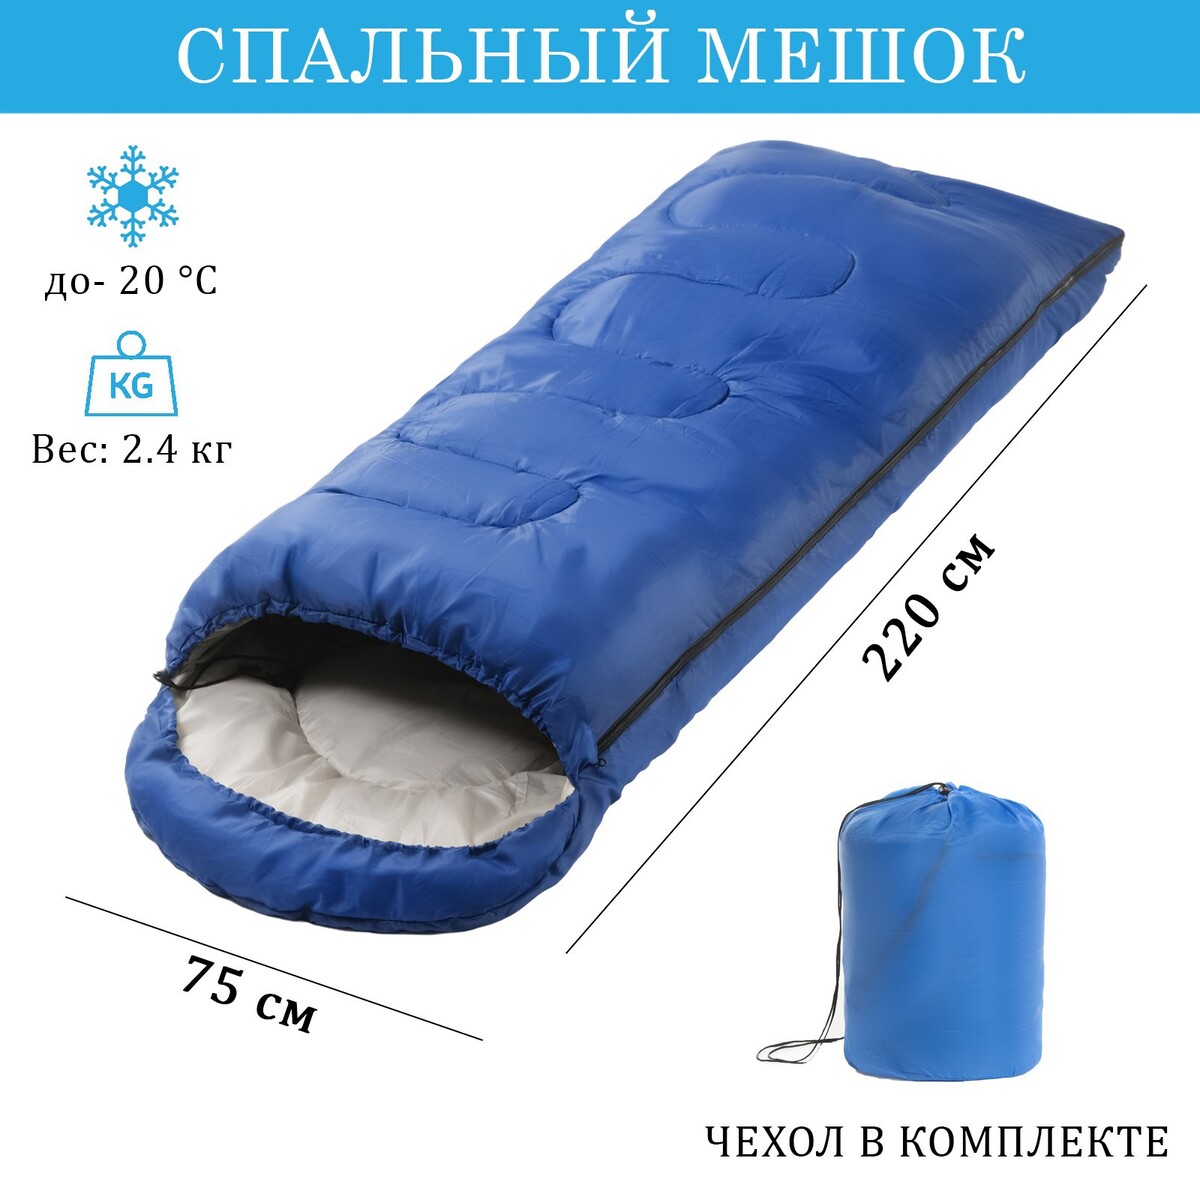 Спальный мешок туристический, 220 х 75 см, до -20 градусов, 700 г/м2, синий спальный мешок туристический atemi t20n 100 г м2 20 c